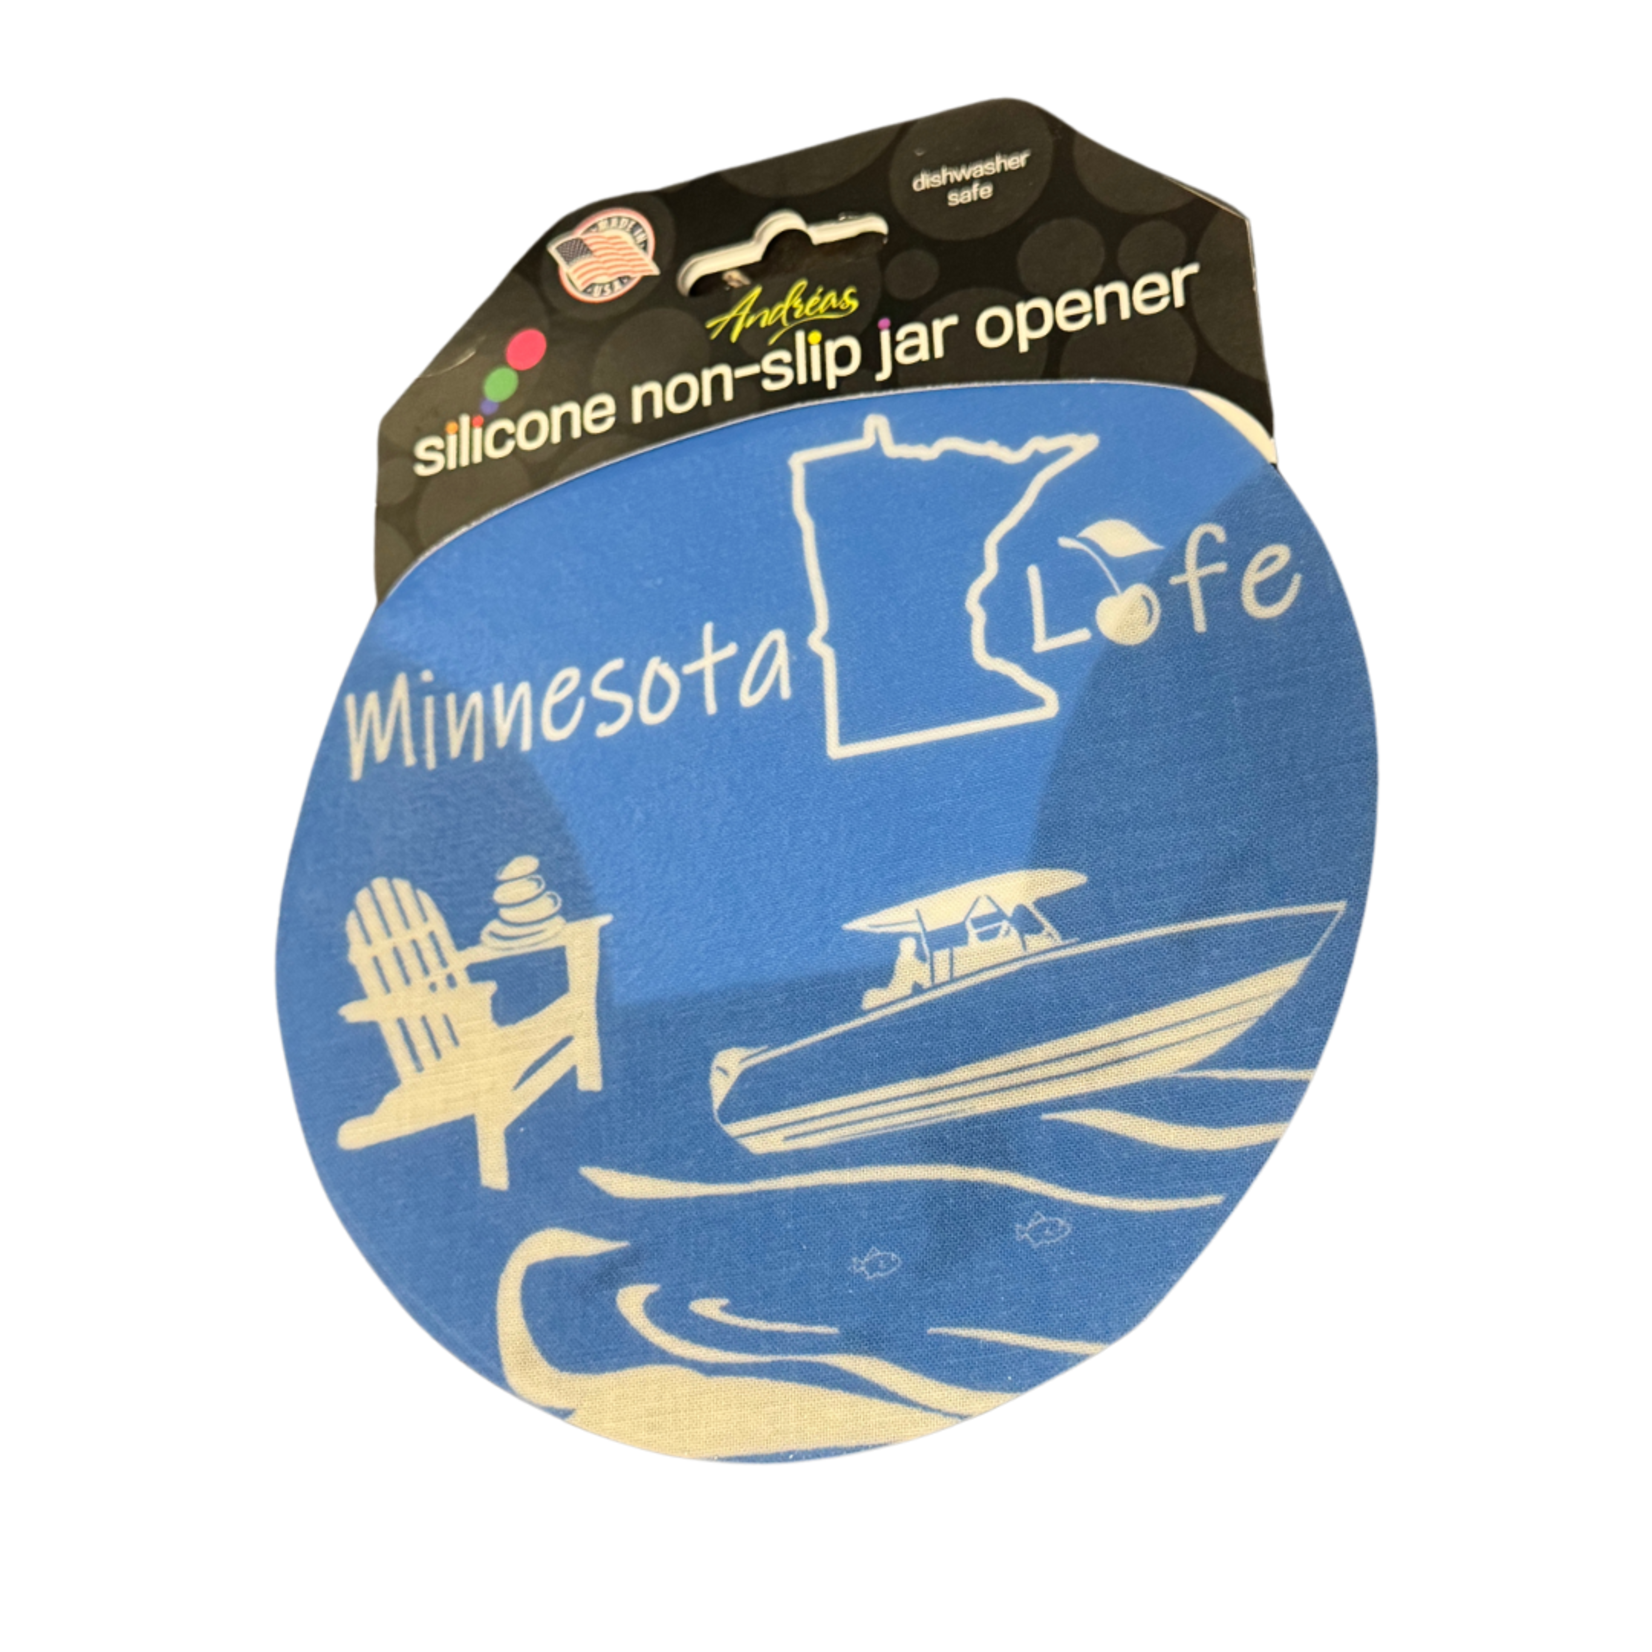 Andrea's Silicone Trivets Jar Opener, Minnesota Life